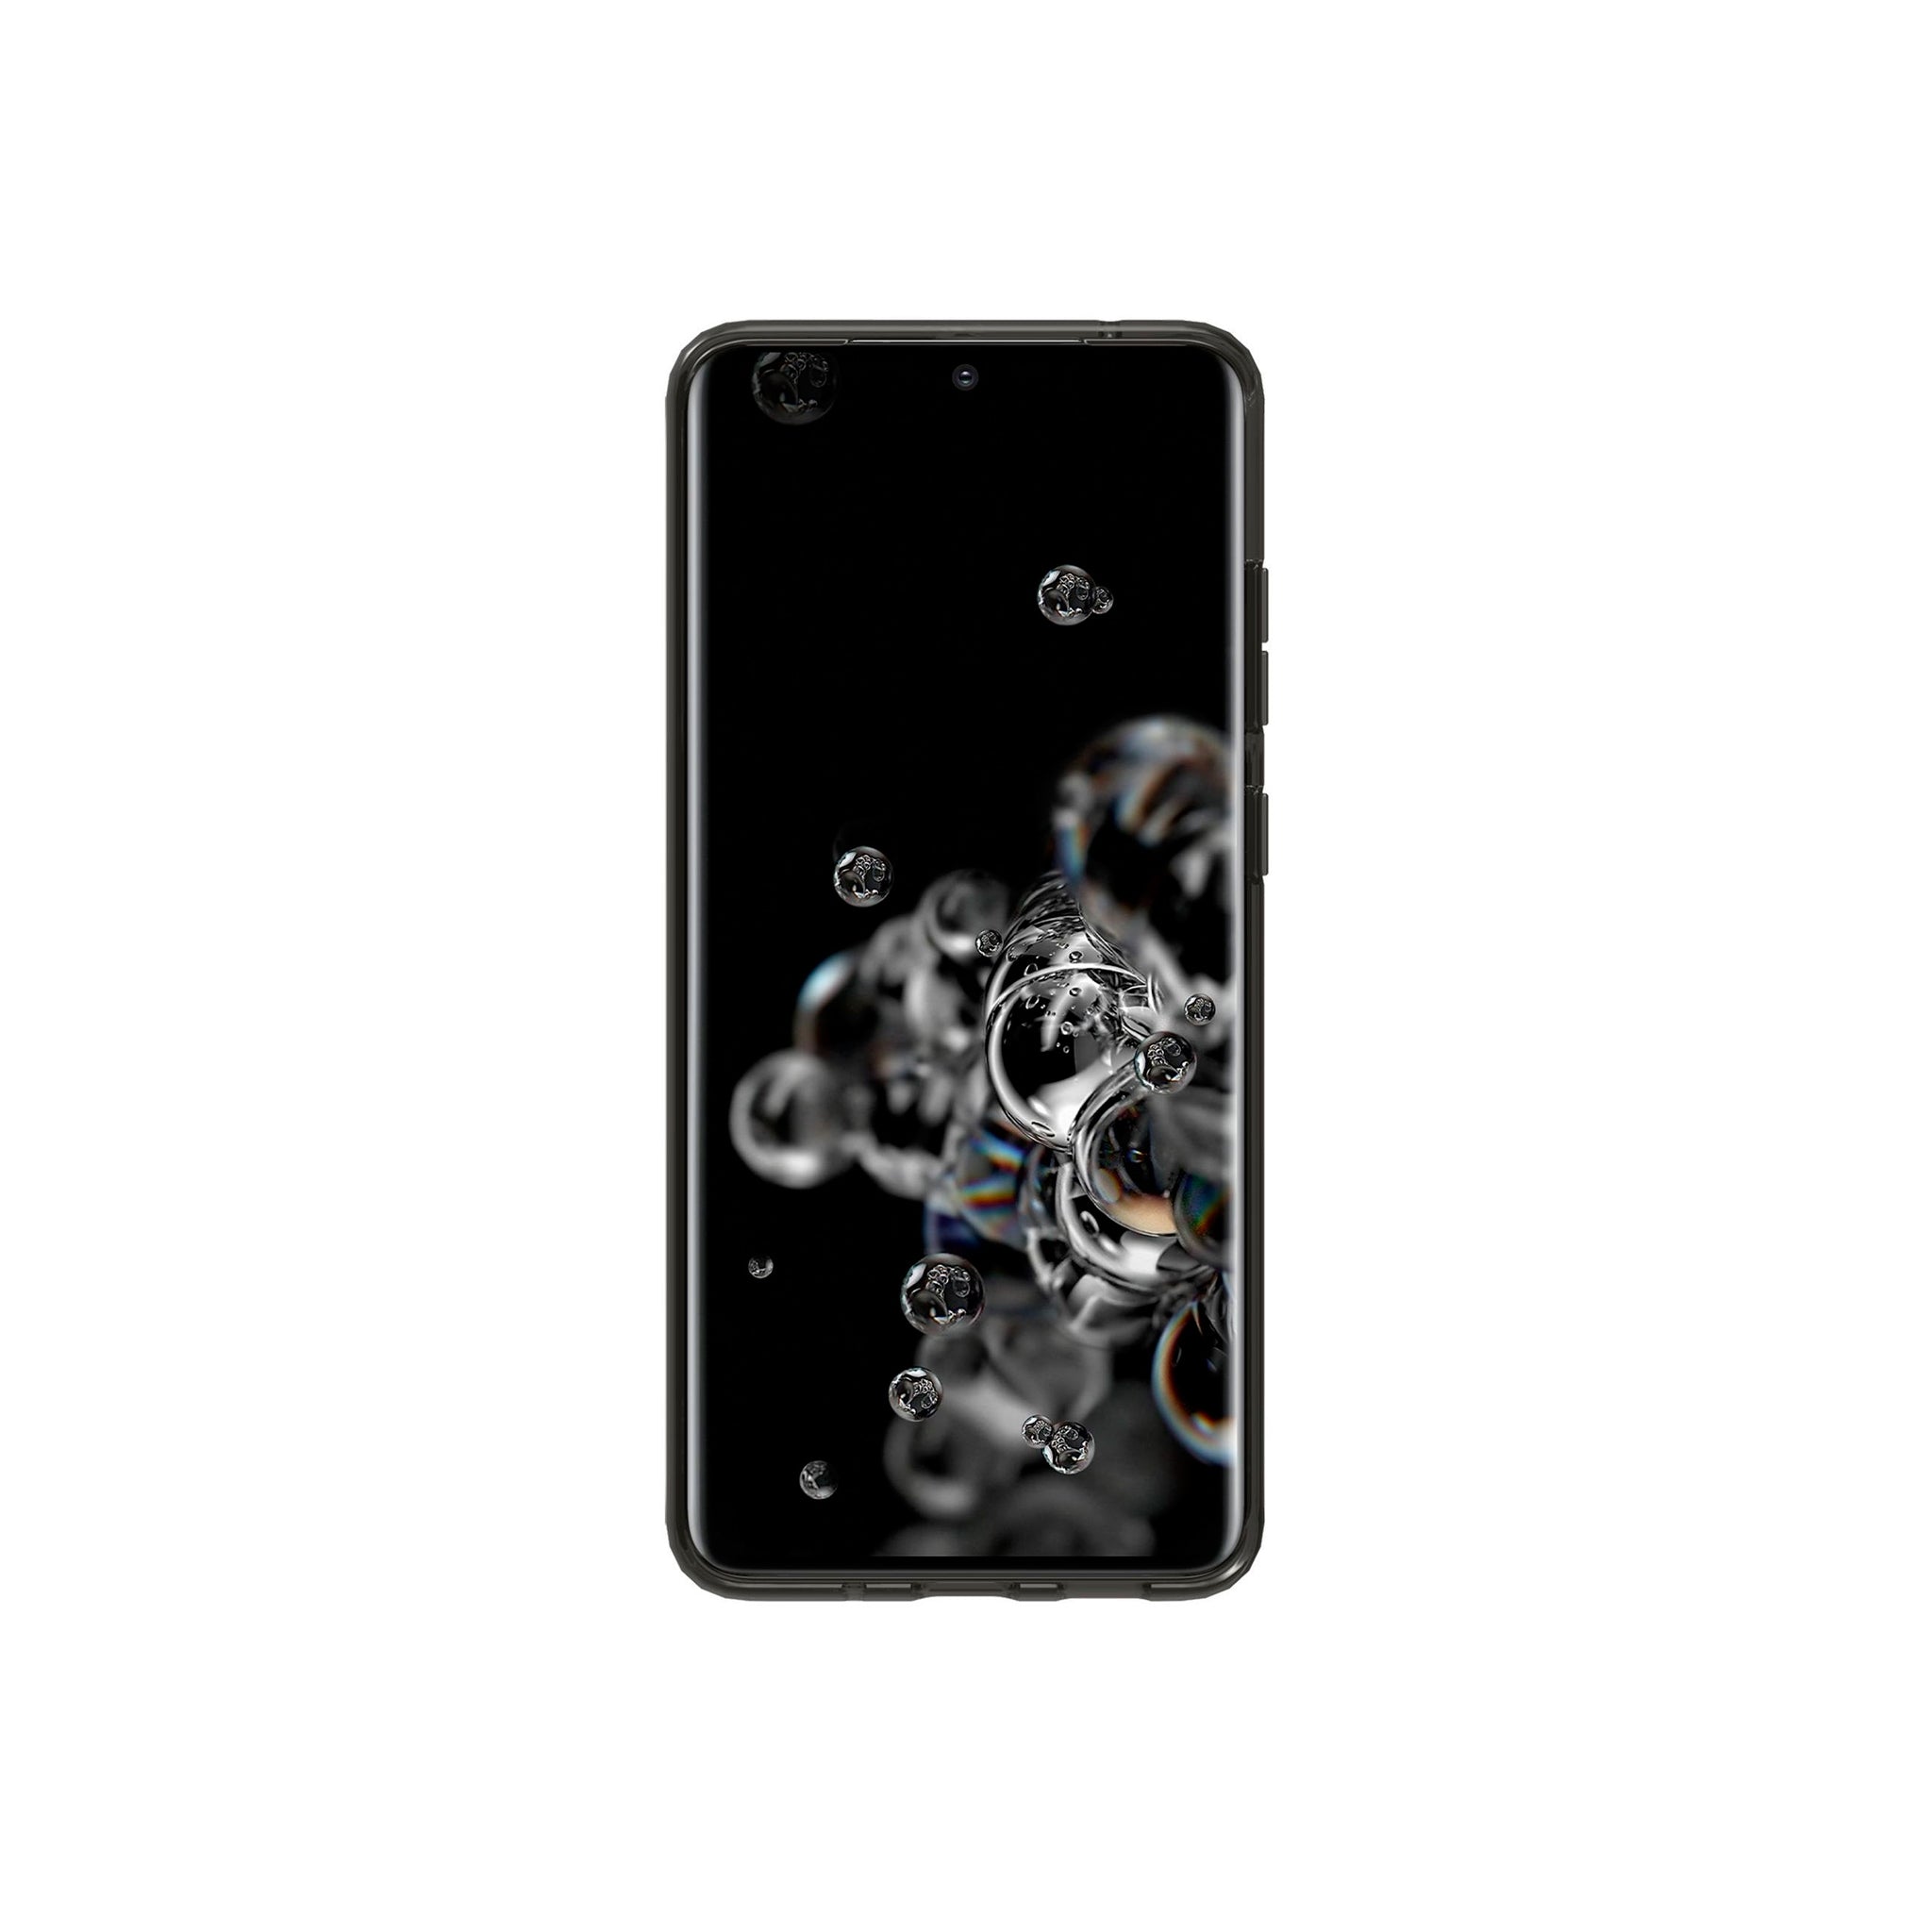 Incipio - Ngp Pure Case For Samsung Galaxy S20 Ultra - Black